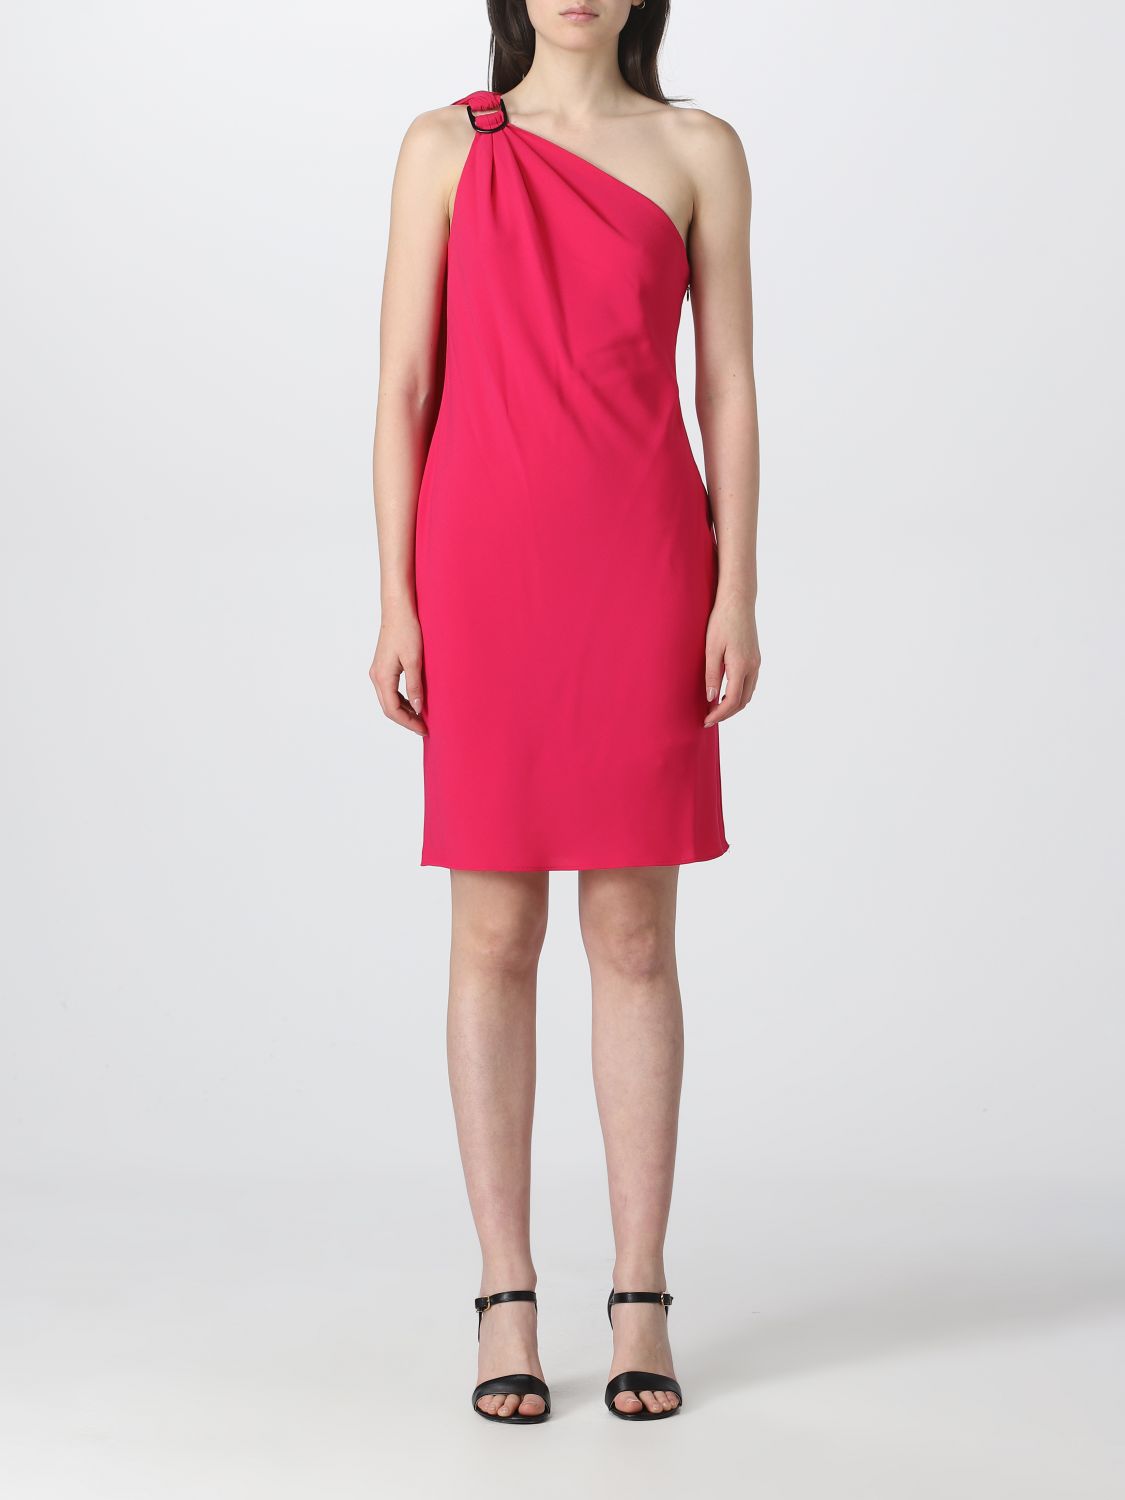 LAUREN RALPH LAUREN: dress for woman - Fuchsia | Lauren Ralph Lauren dress  253903215 online on 